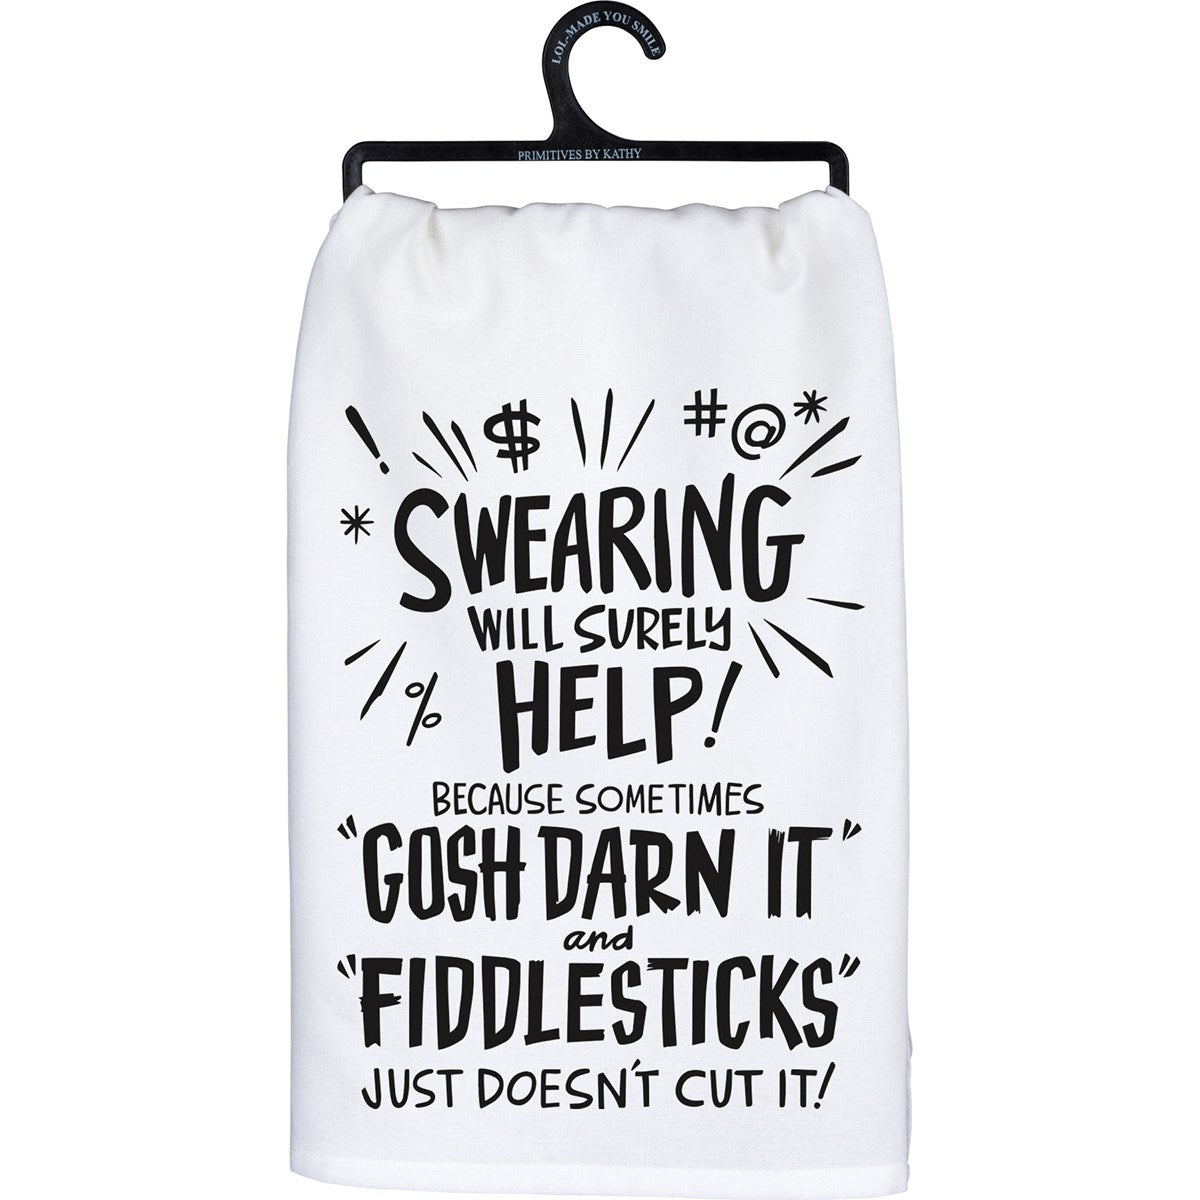 Fiddlesticks Just Doesn't Cut It Kitchen Towel